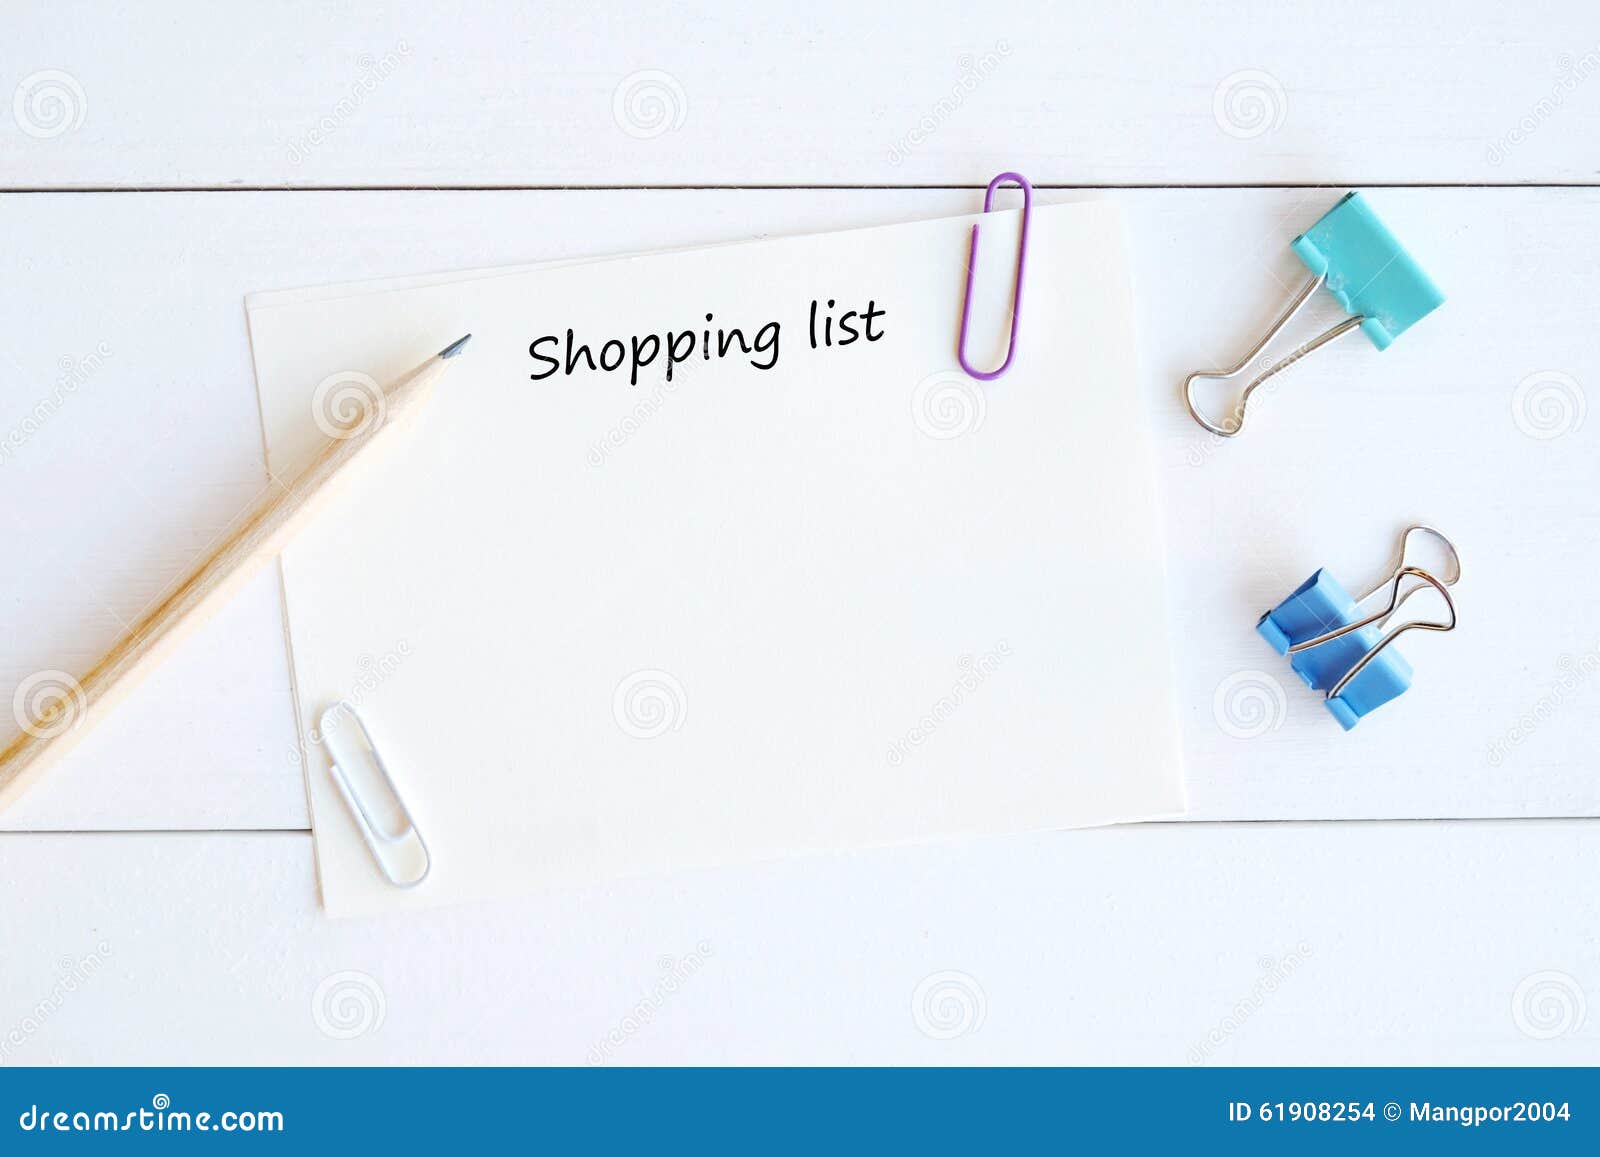 Pin on Shopping List